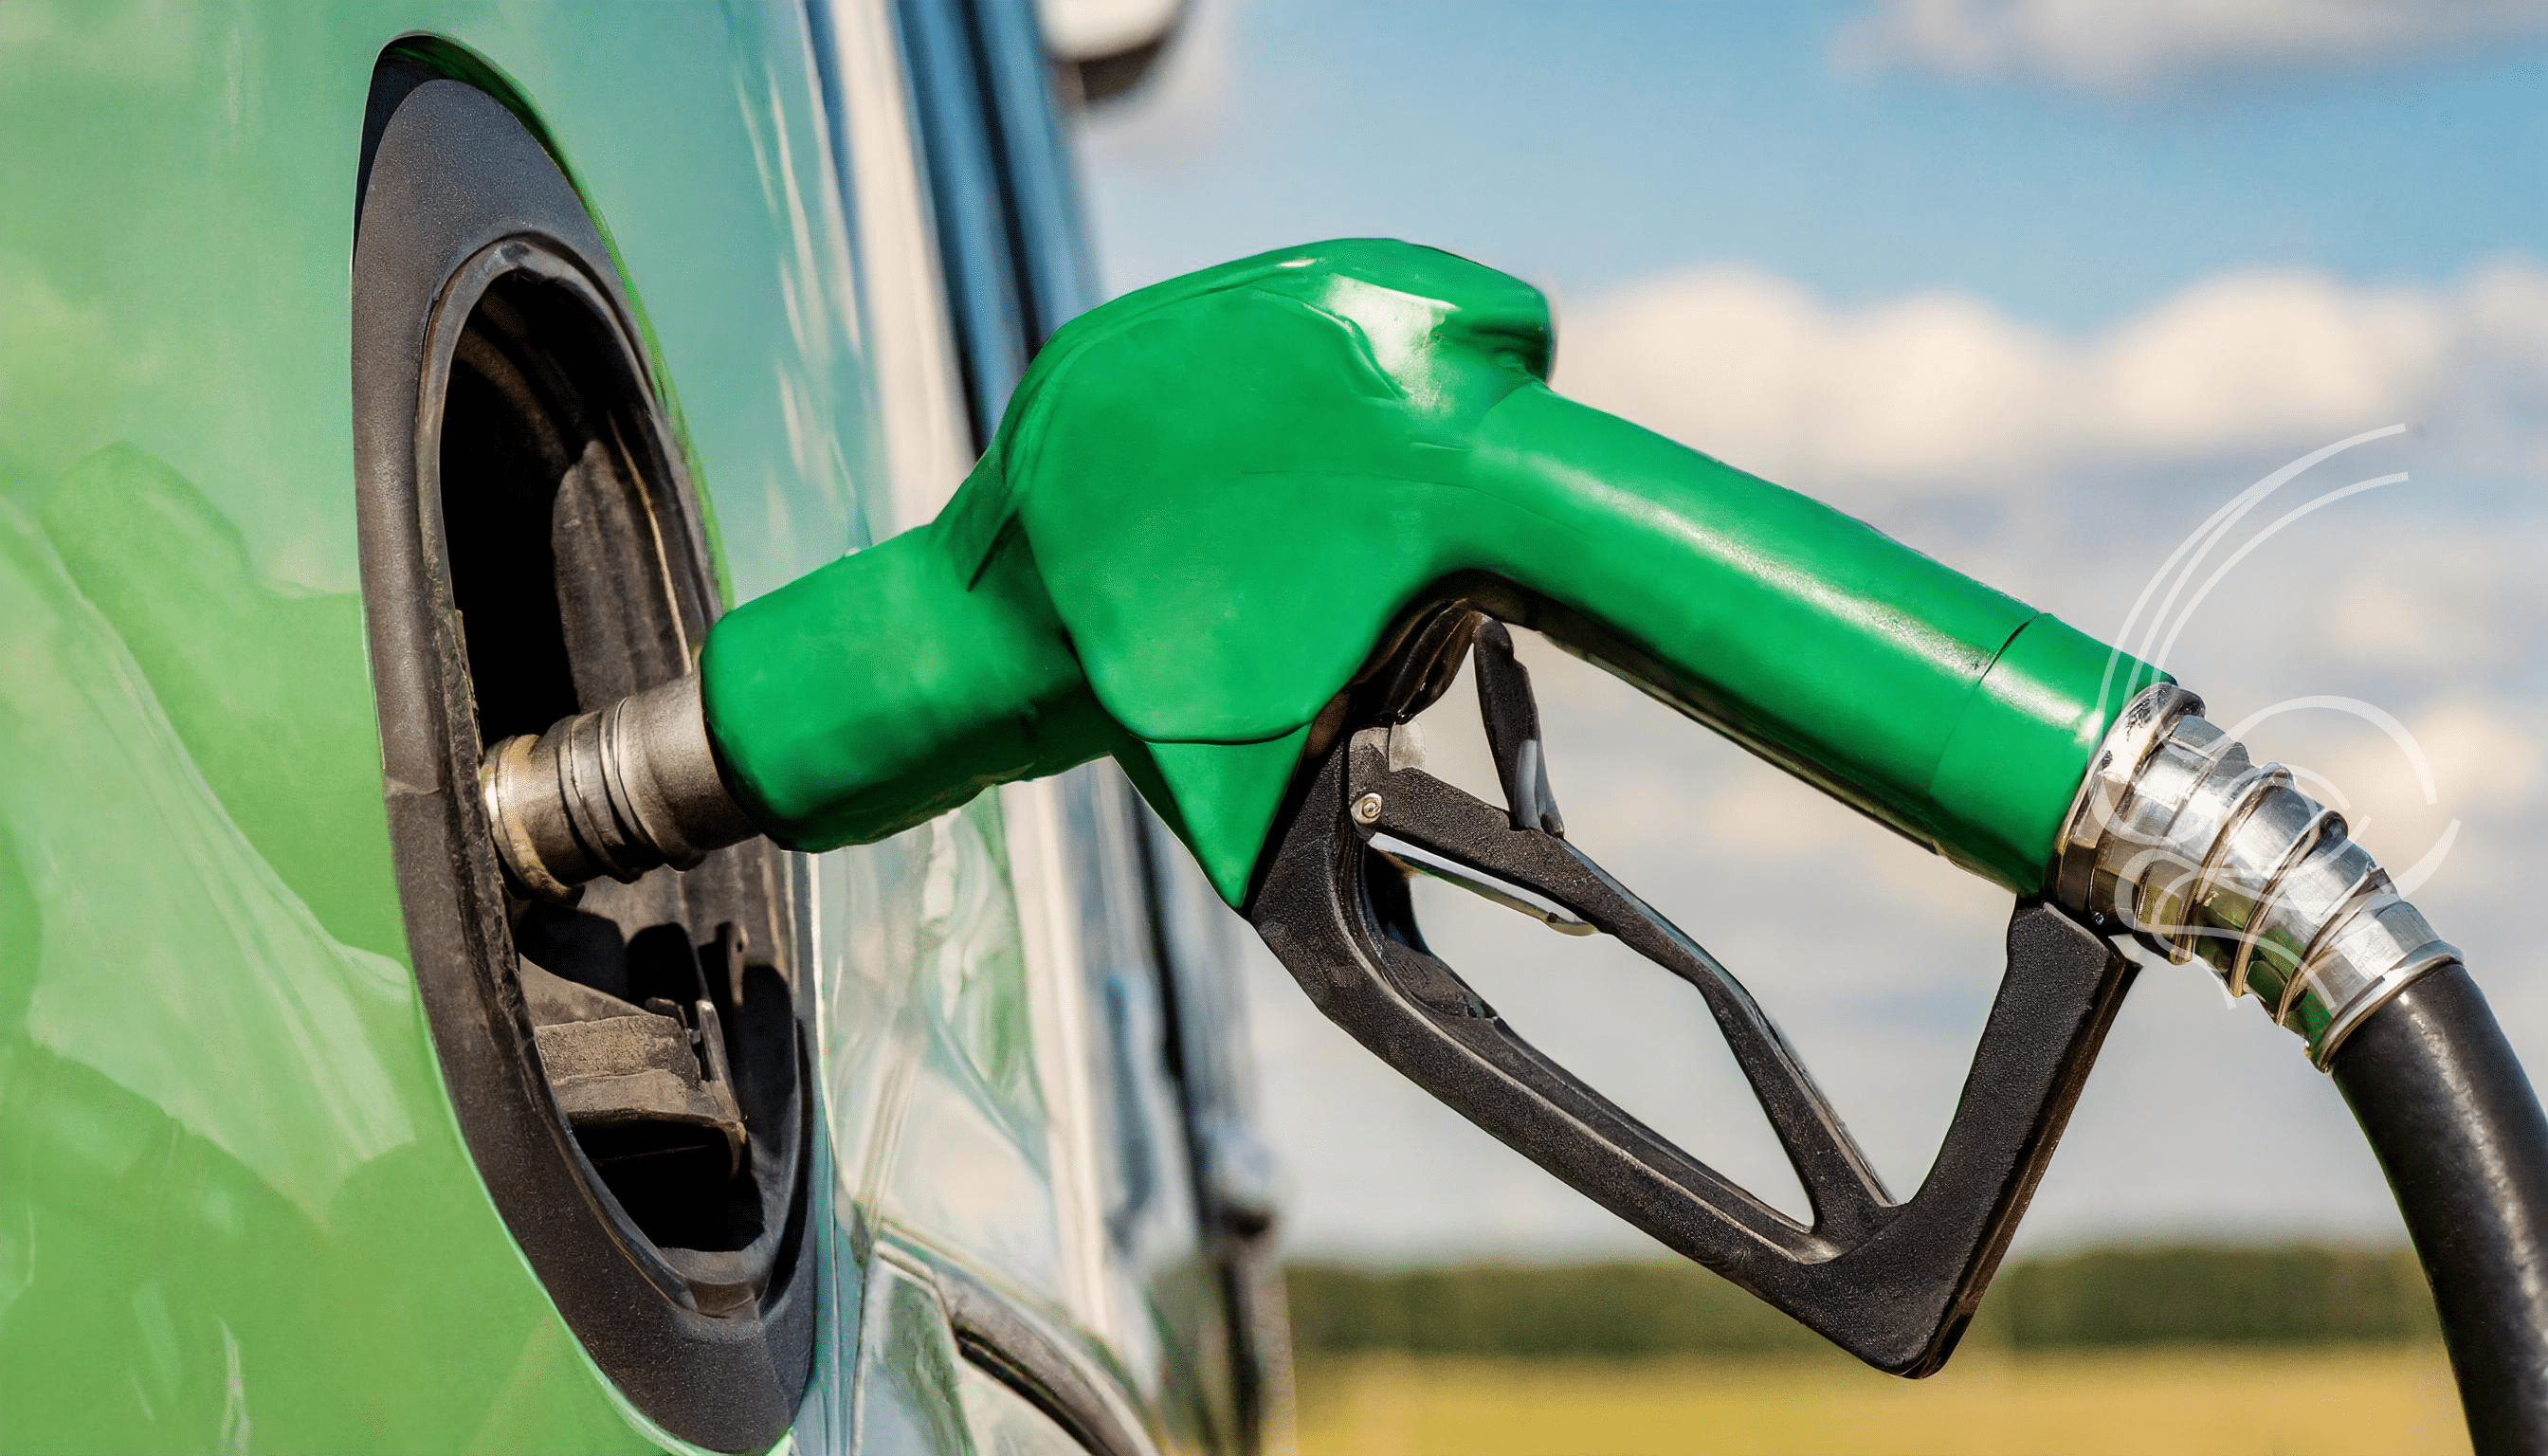 etanol-hidratado-registra-quinta-semana-de-alta-nos-precos